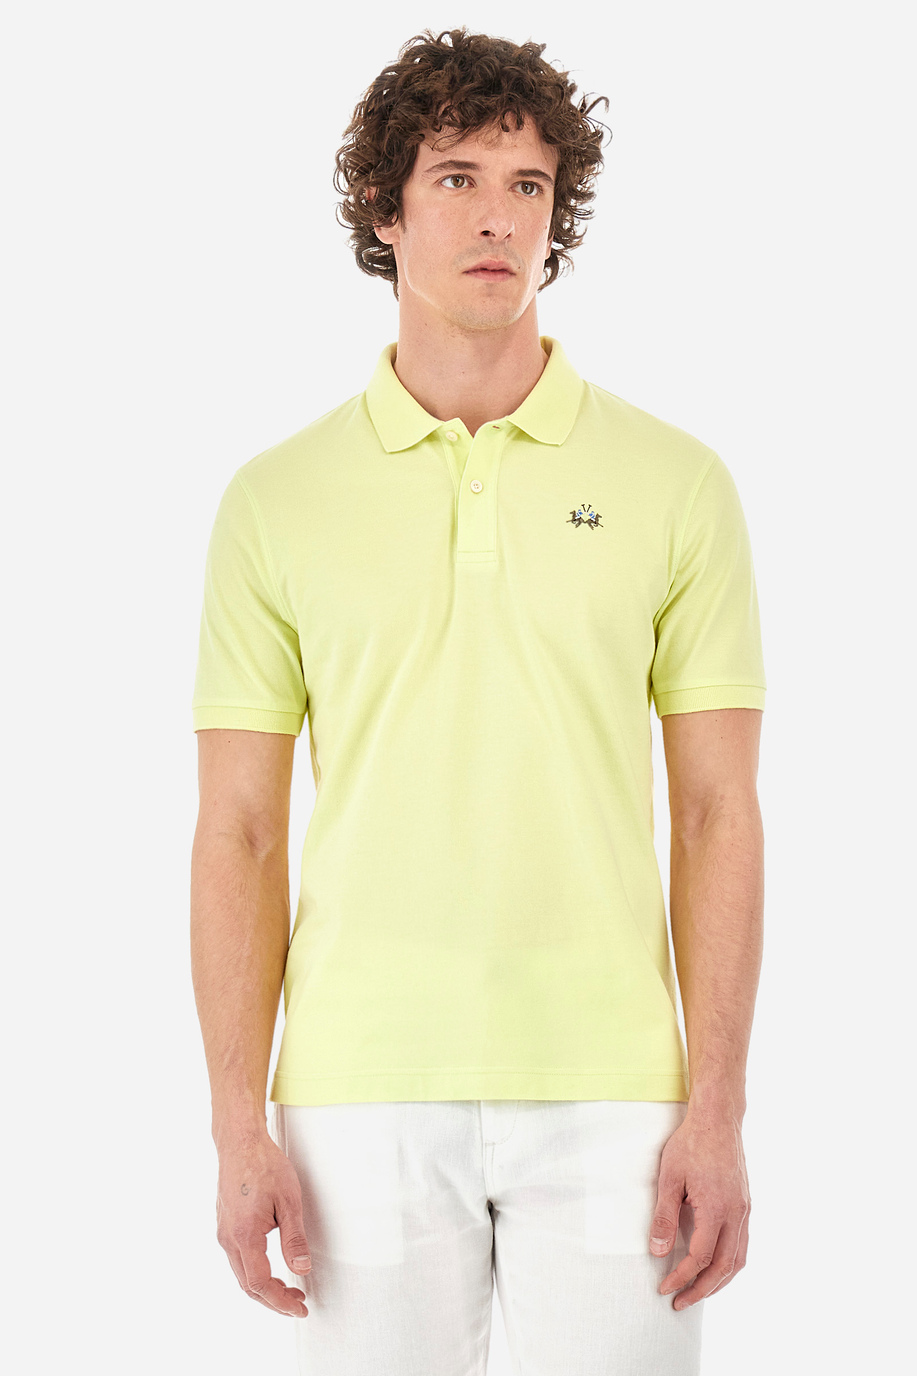 Slim-fit polo shirt in stretch cotton - Eduardo - Spring looks for him | La Martina - Official Online Shop